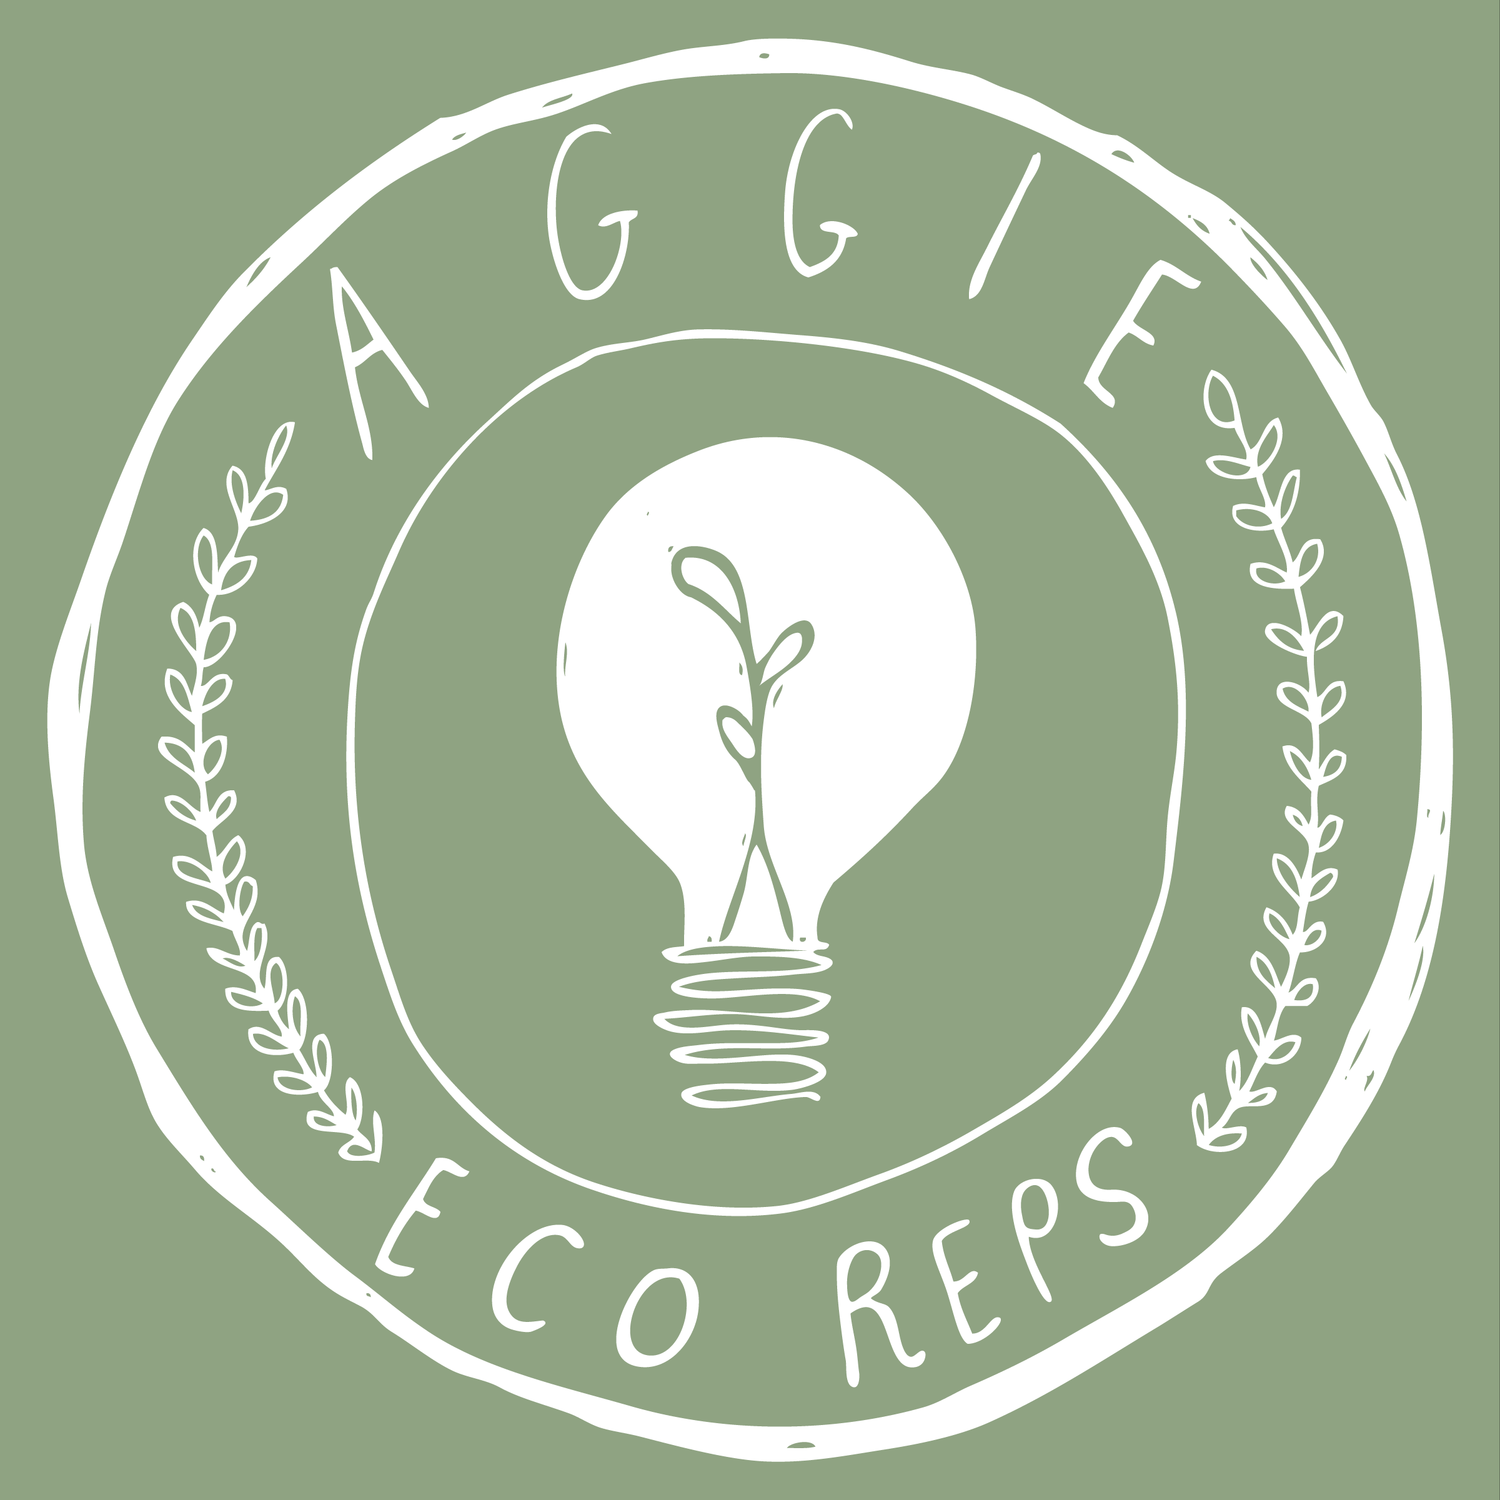 Aggie E-Corps Logo